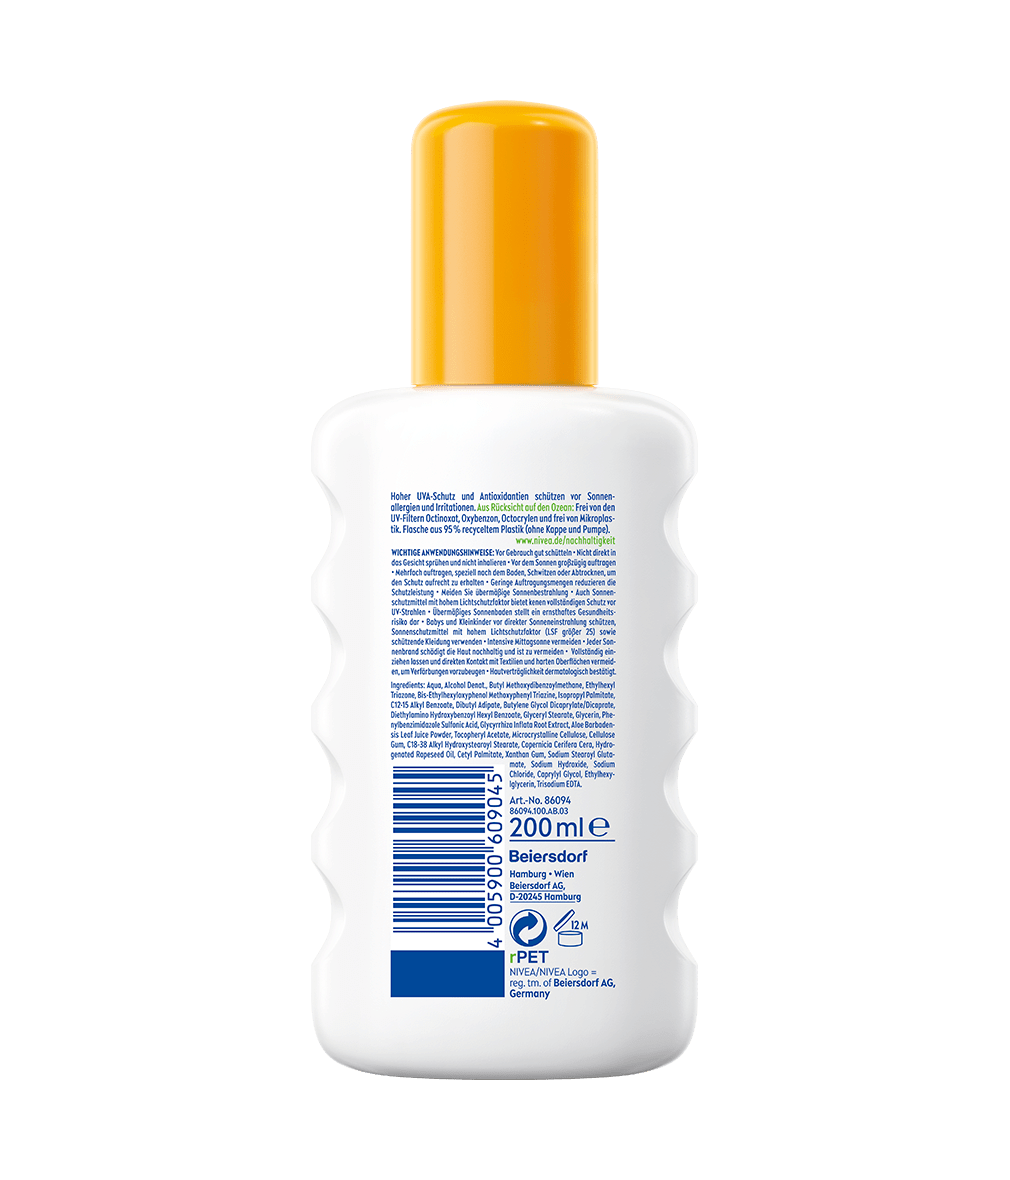 NIVEA SUN Sensitiv Sofort Schutz Spray 50+ 200 ml